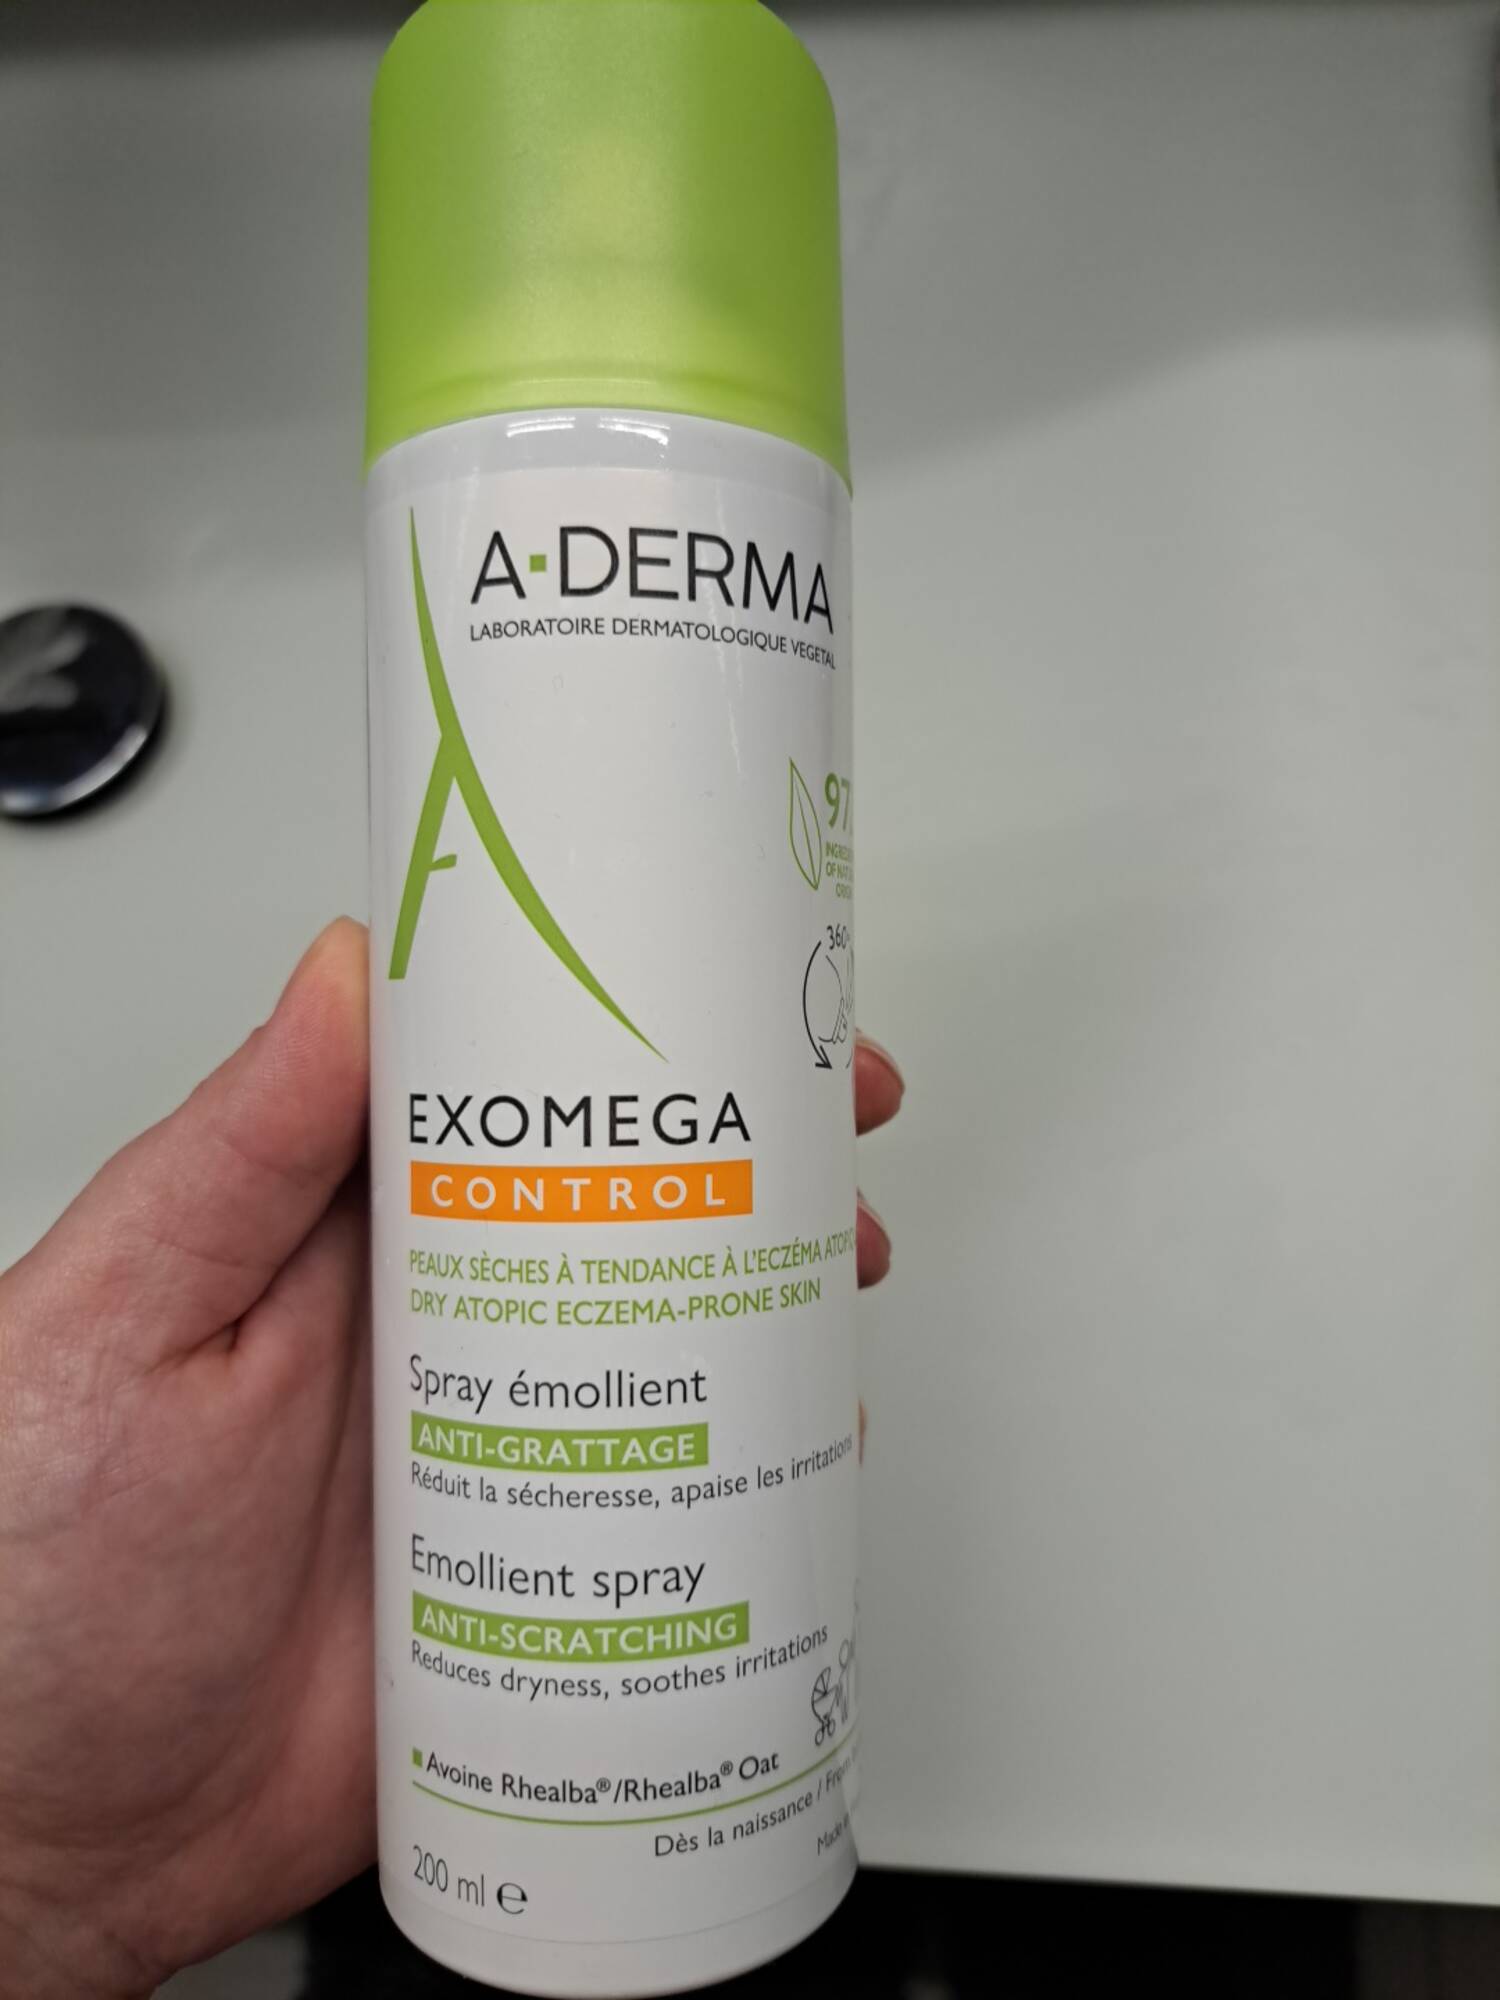 A-DERMA - Exomega control - Spray émollient anti-grattage